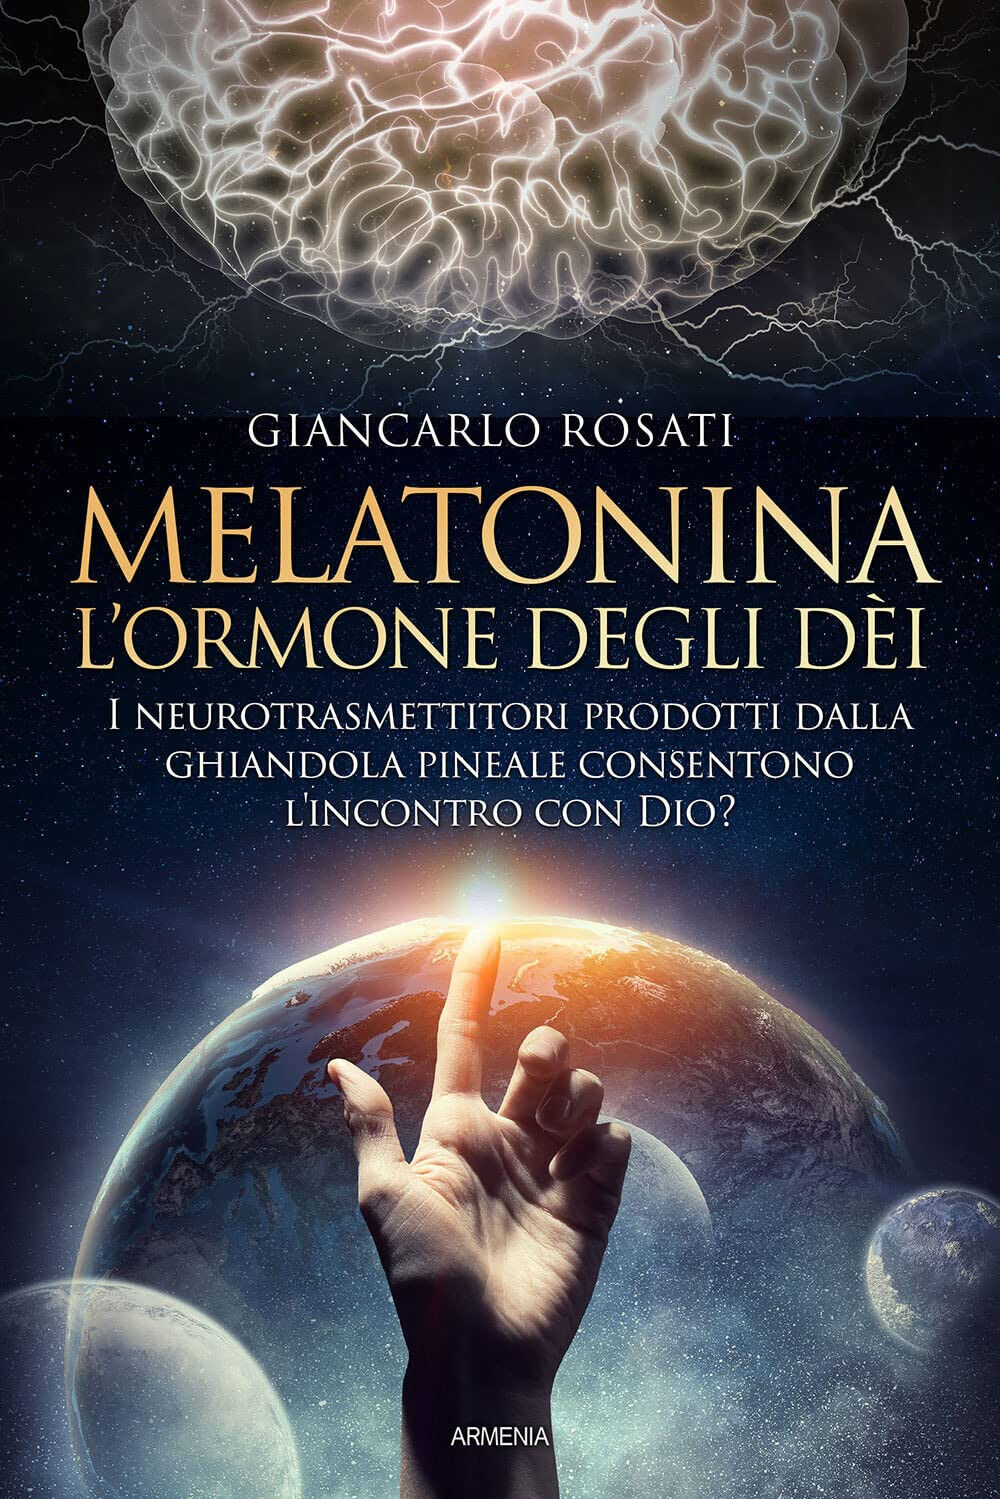 Melatonina, l'ormone degli d?i - Giancarlo Rosati - Armenia, 2022